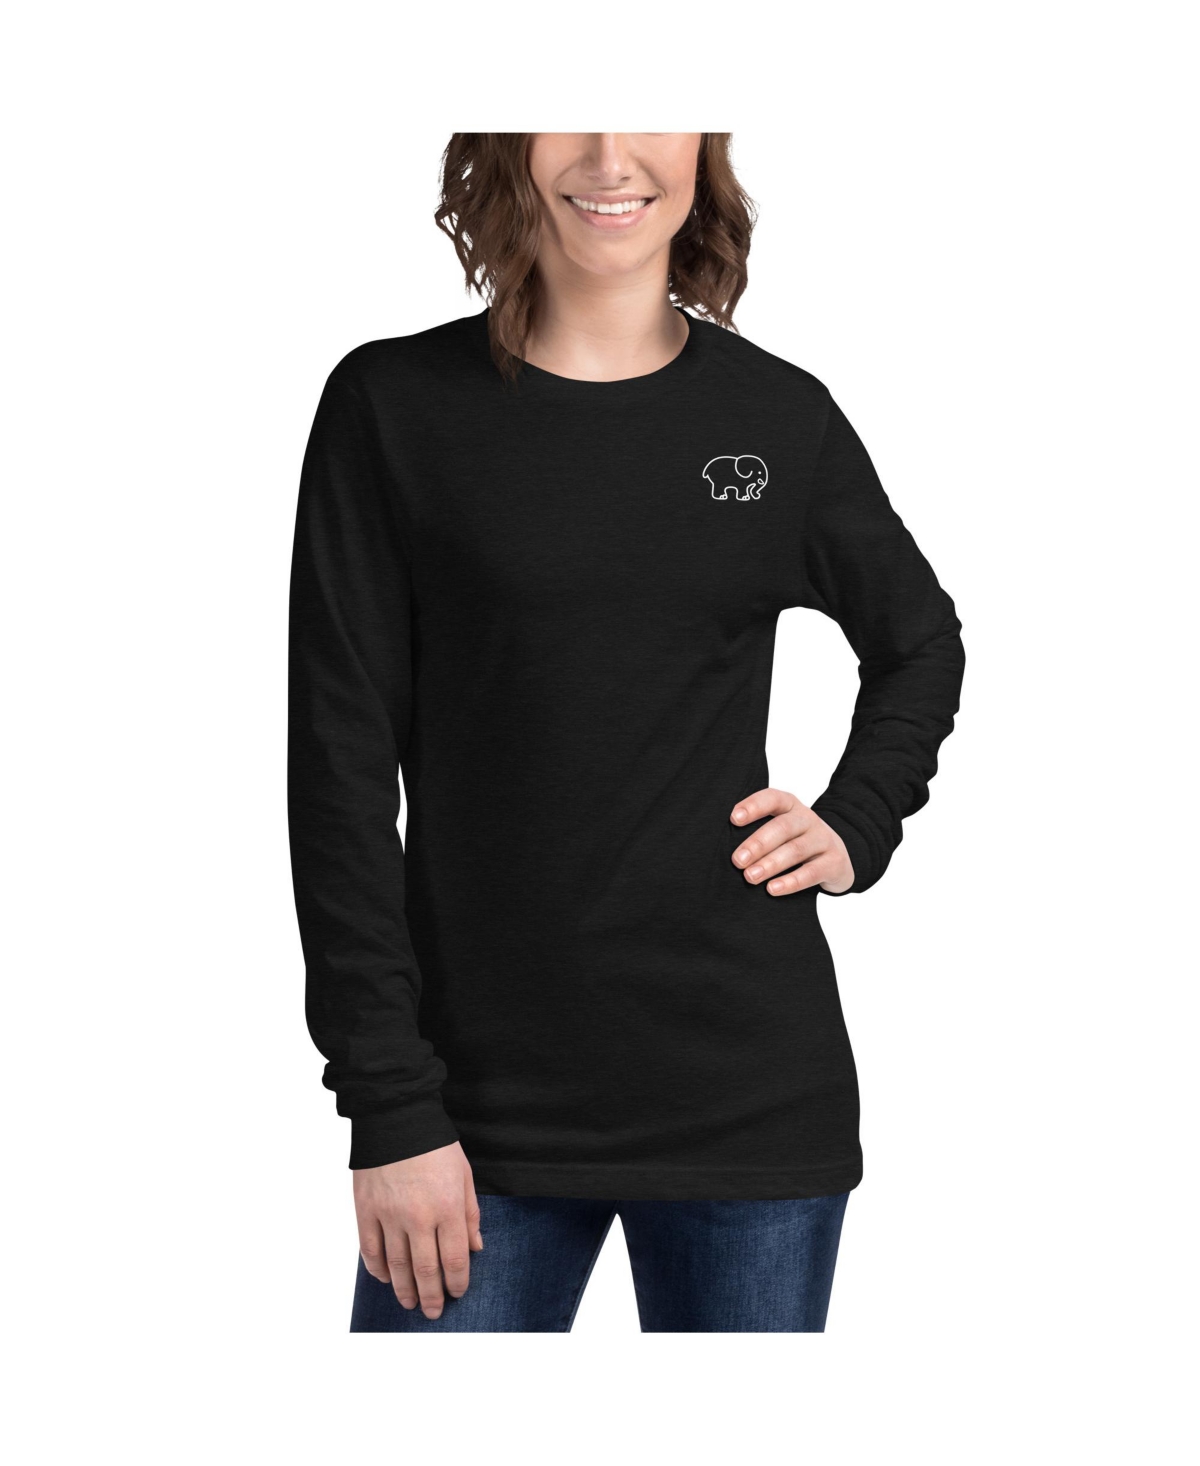 Women's Moonlight Long Sleeve Unisex T-Shirt - Black